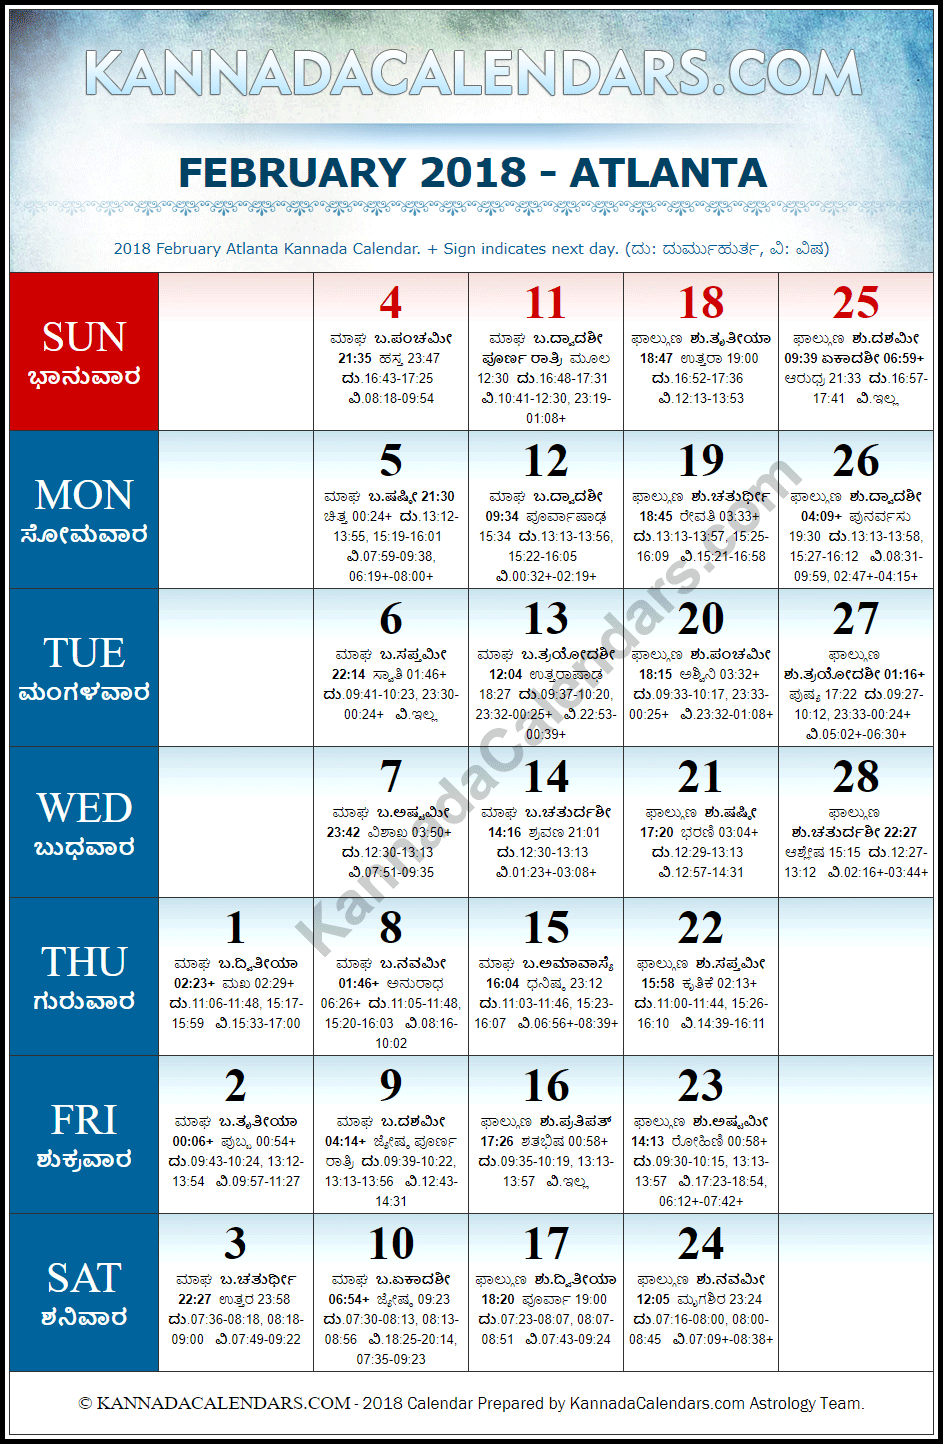 February 2018 Kannada Calendar for Atlanta, USA